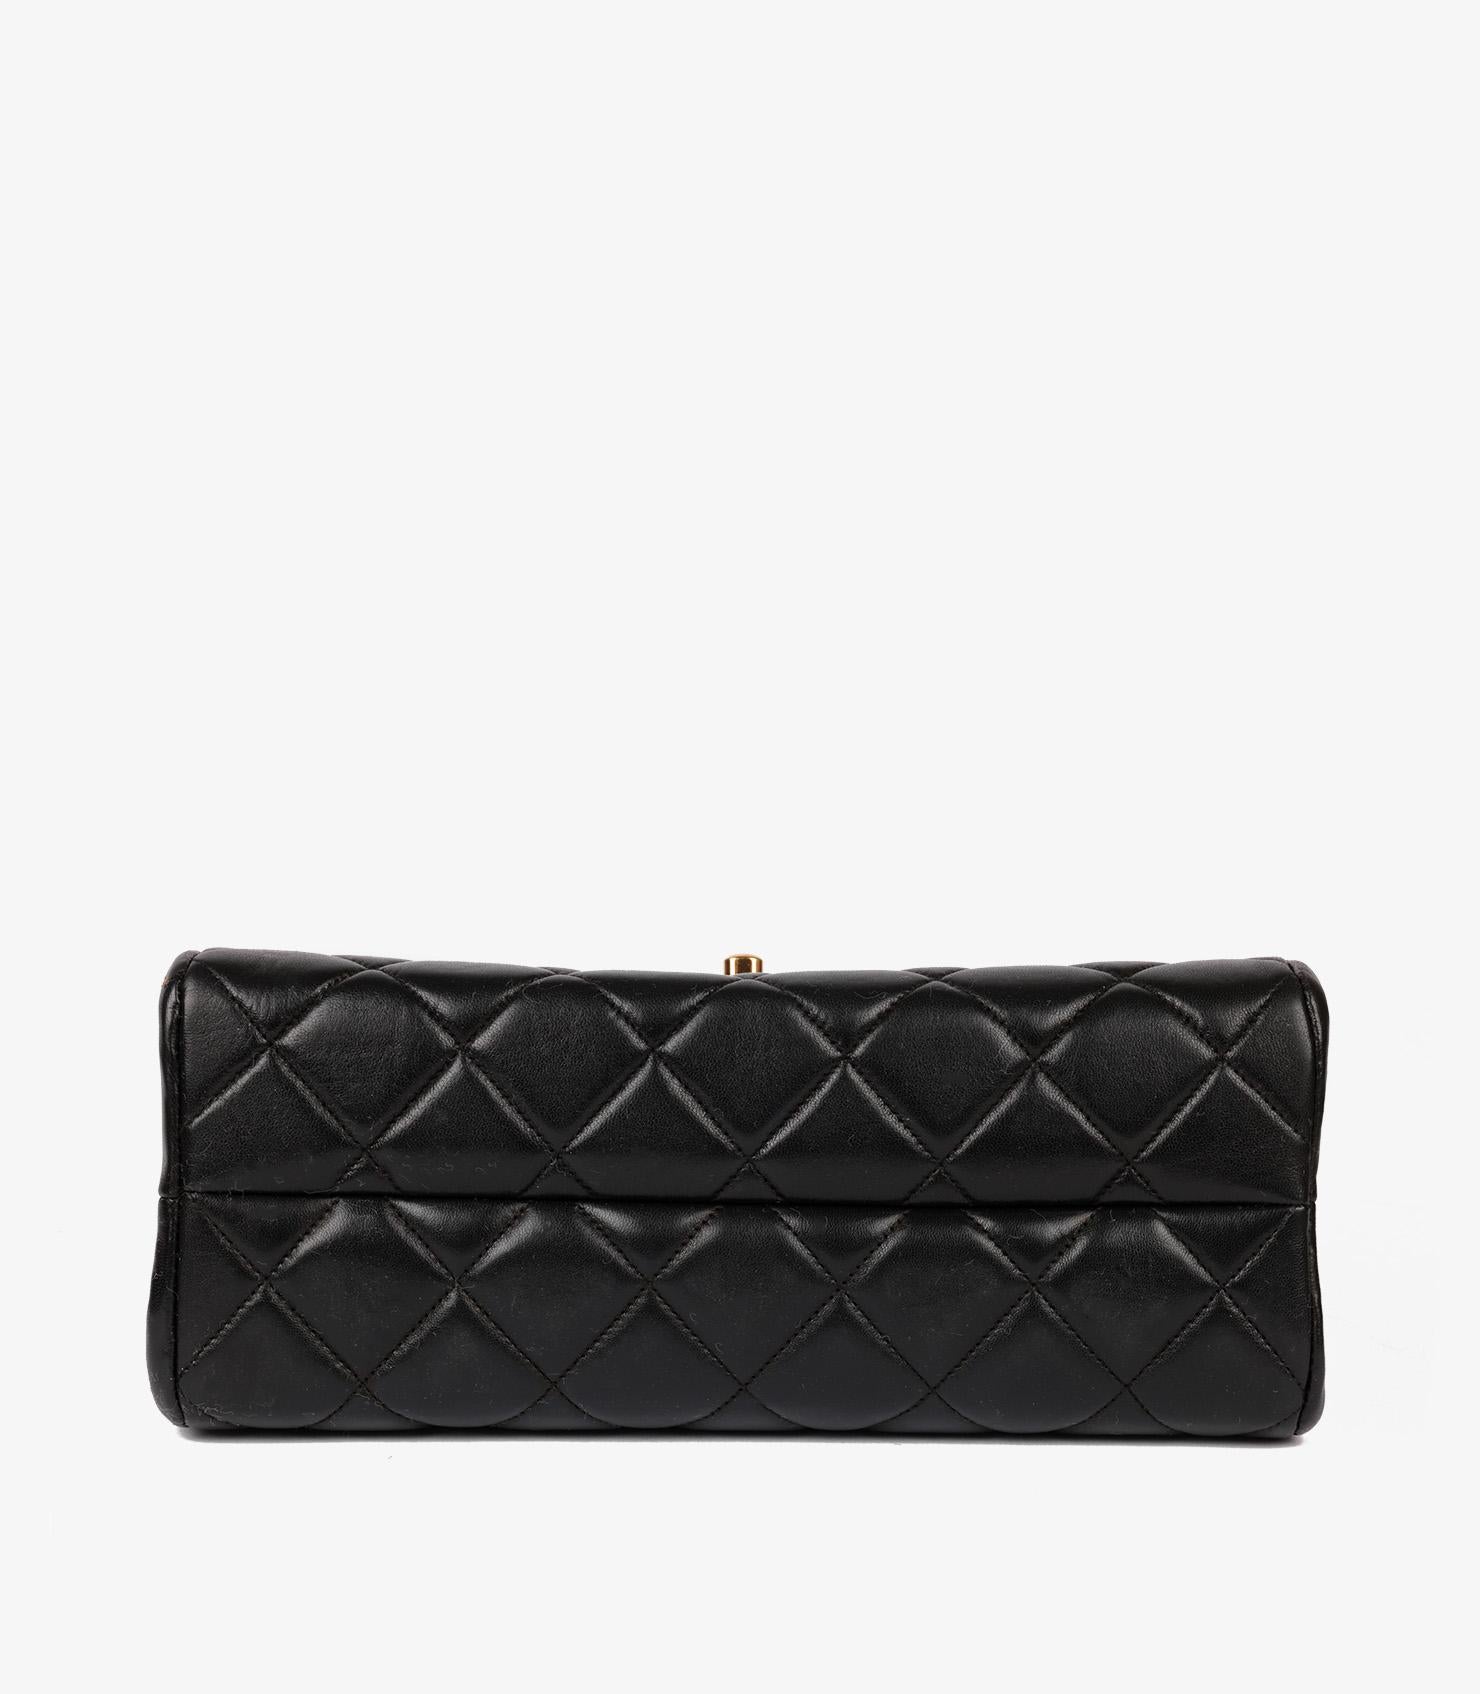 Chanel Black Quilted Lambskin Vintage Medium Envelope Classic Single Flap Bag 2